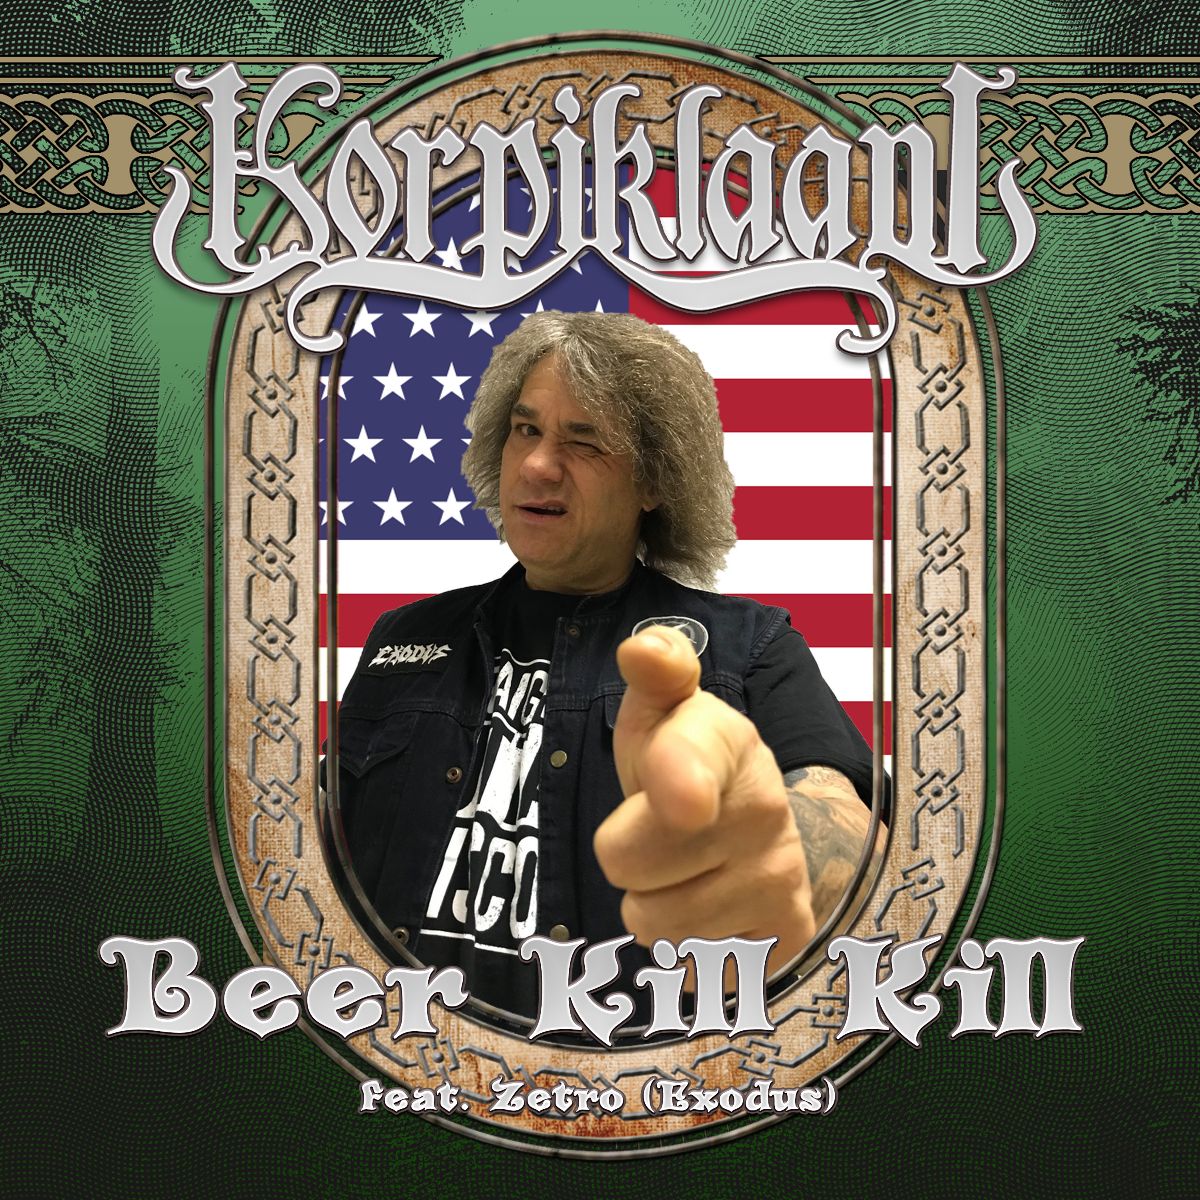 KORPIKLAANI – svelano il nuovo singolo in digitale ‘Beer Kill Kill’ [feat. Steve “Zetro” Souza | EXODUS]!